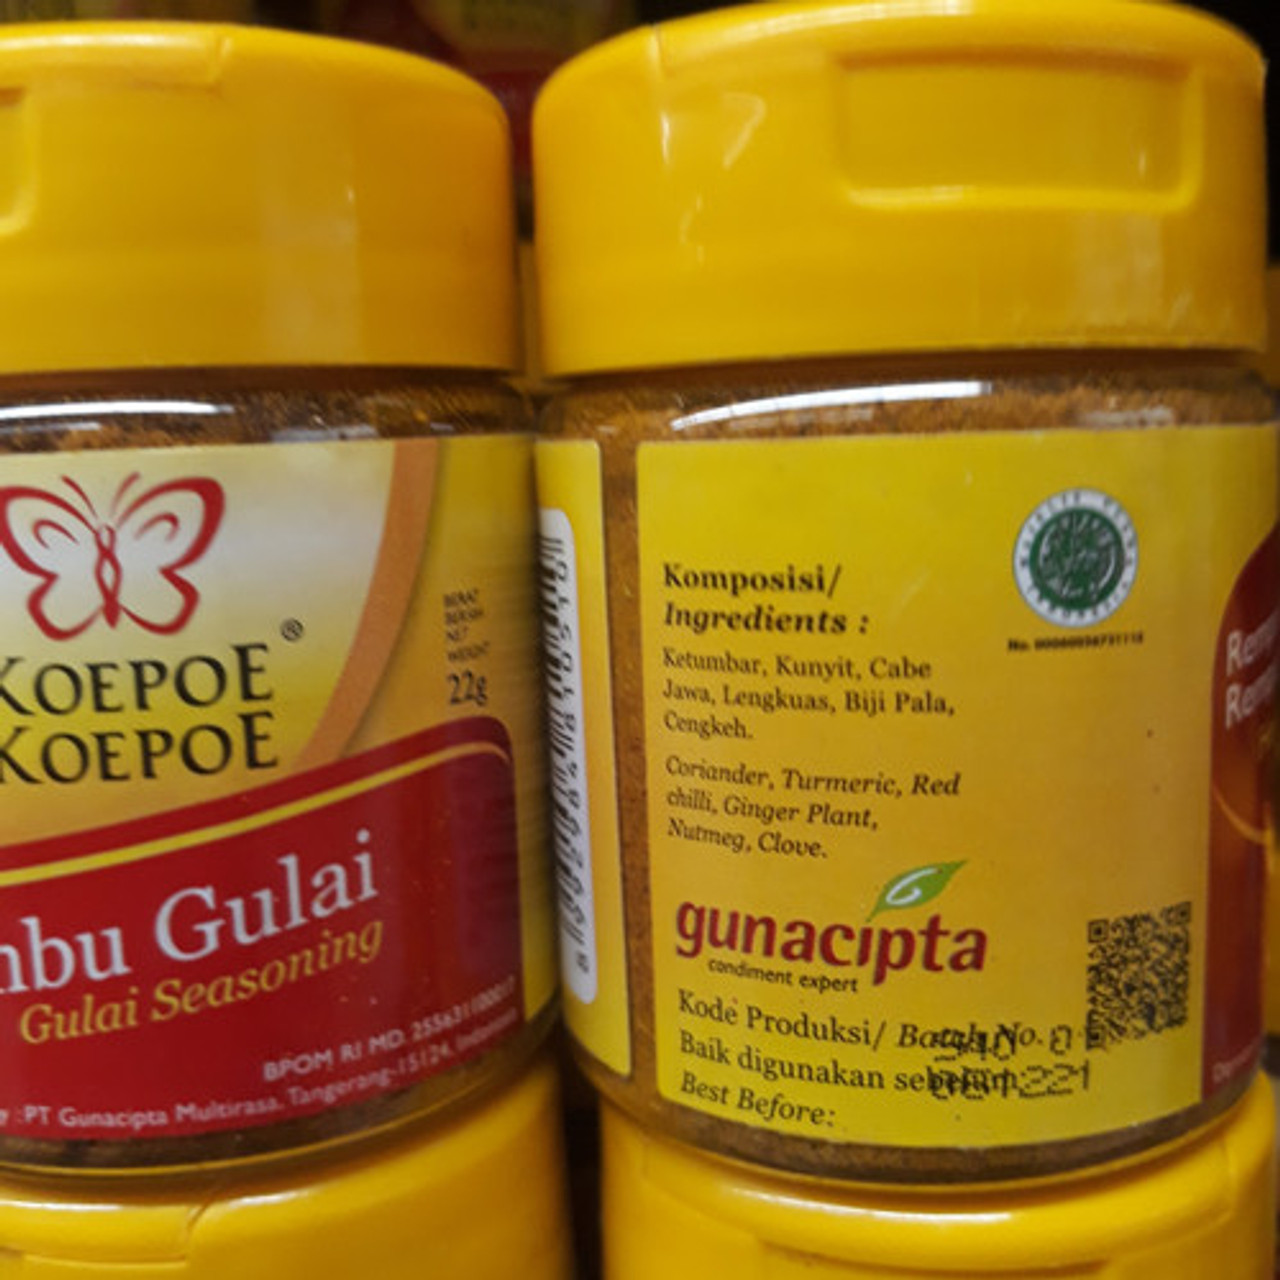 Koepoe-koepoe Bumbu Gulai (Gulai Seasoning), 22 Gram